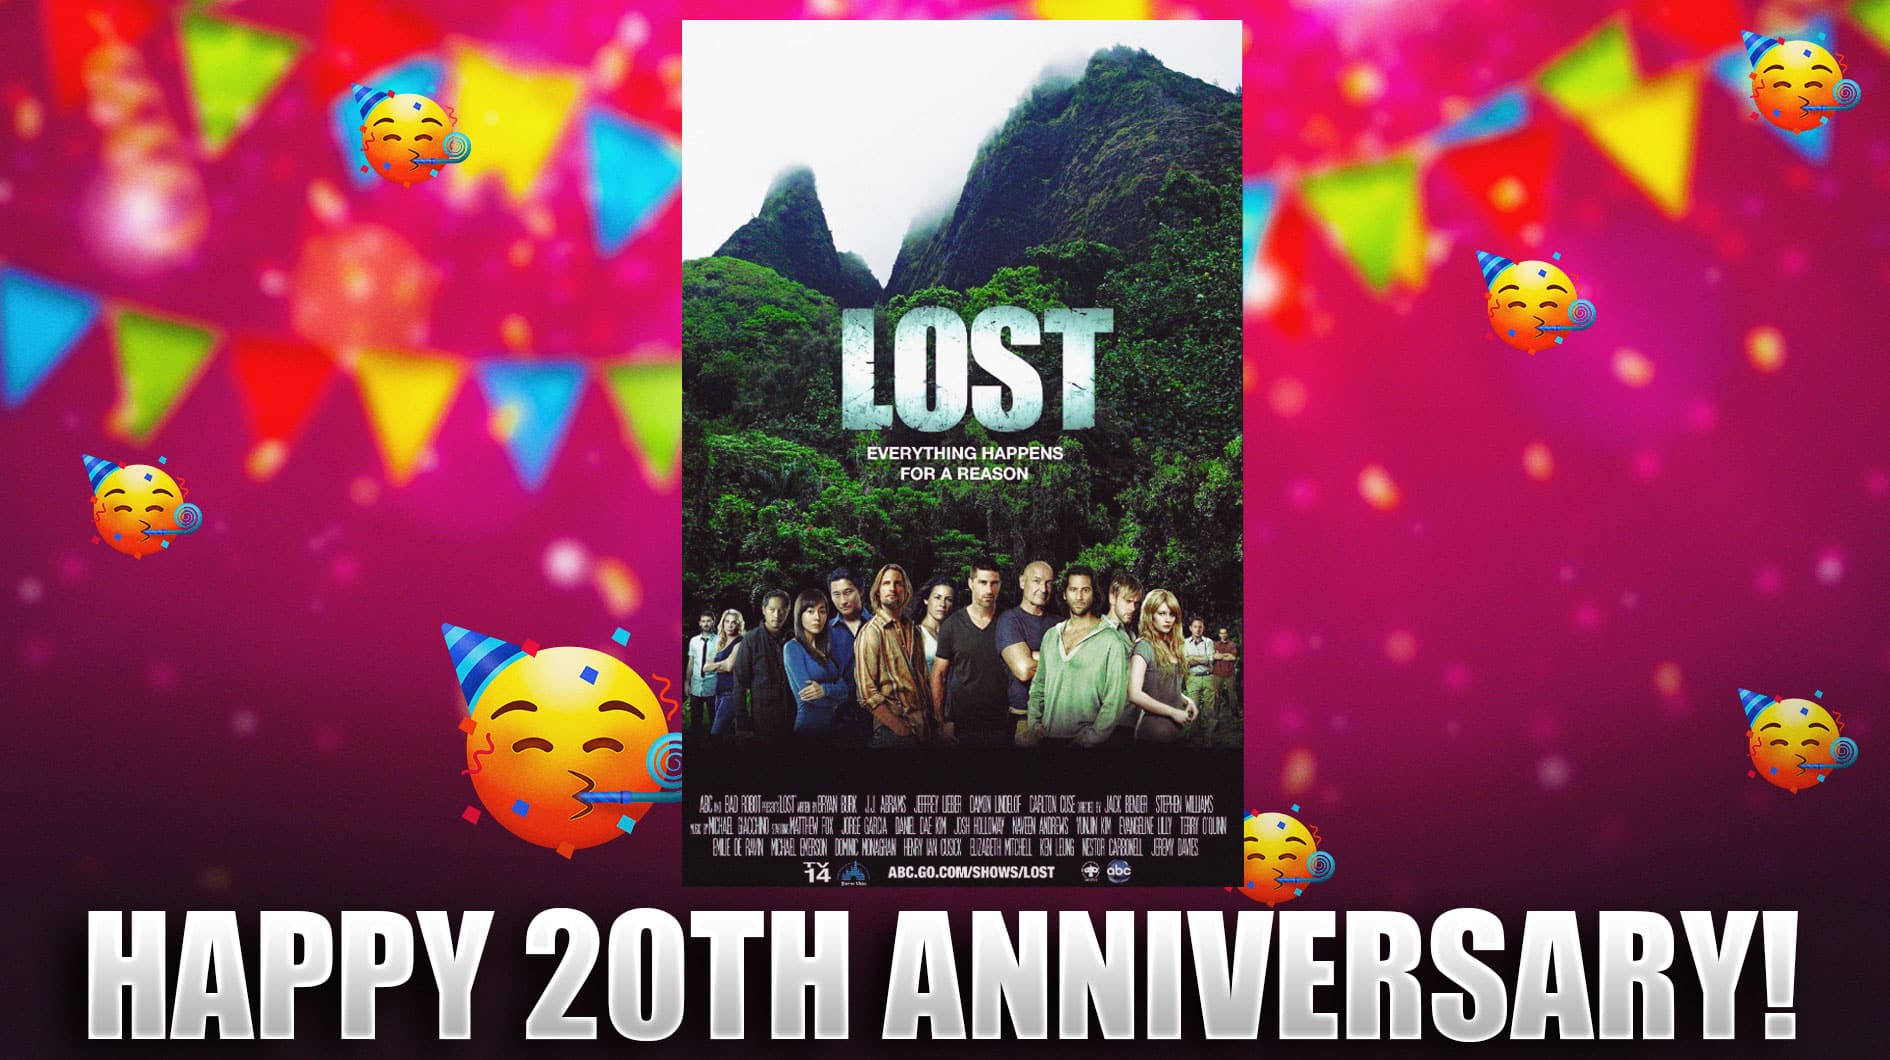 Celebrating Lost’s 20th anniversary